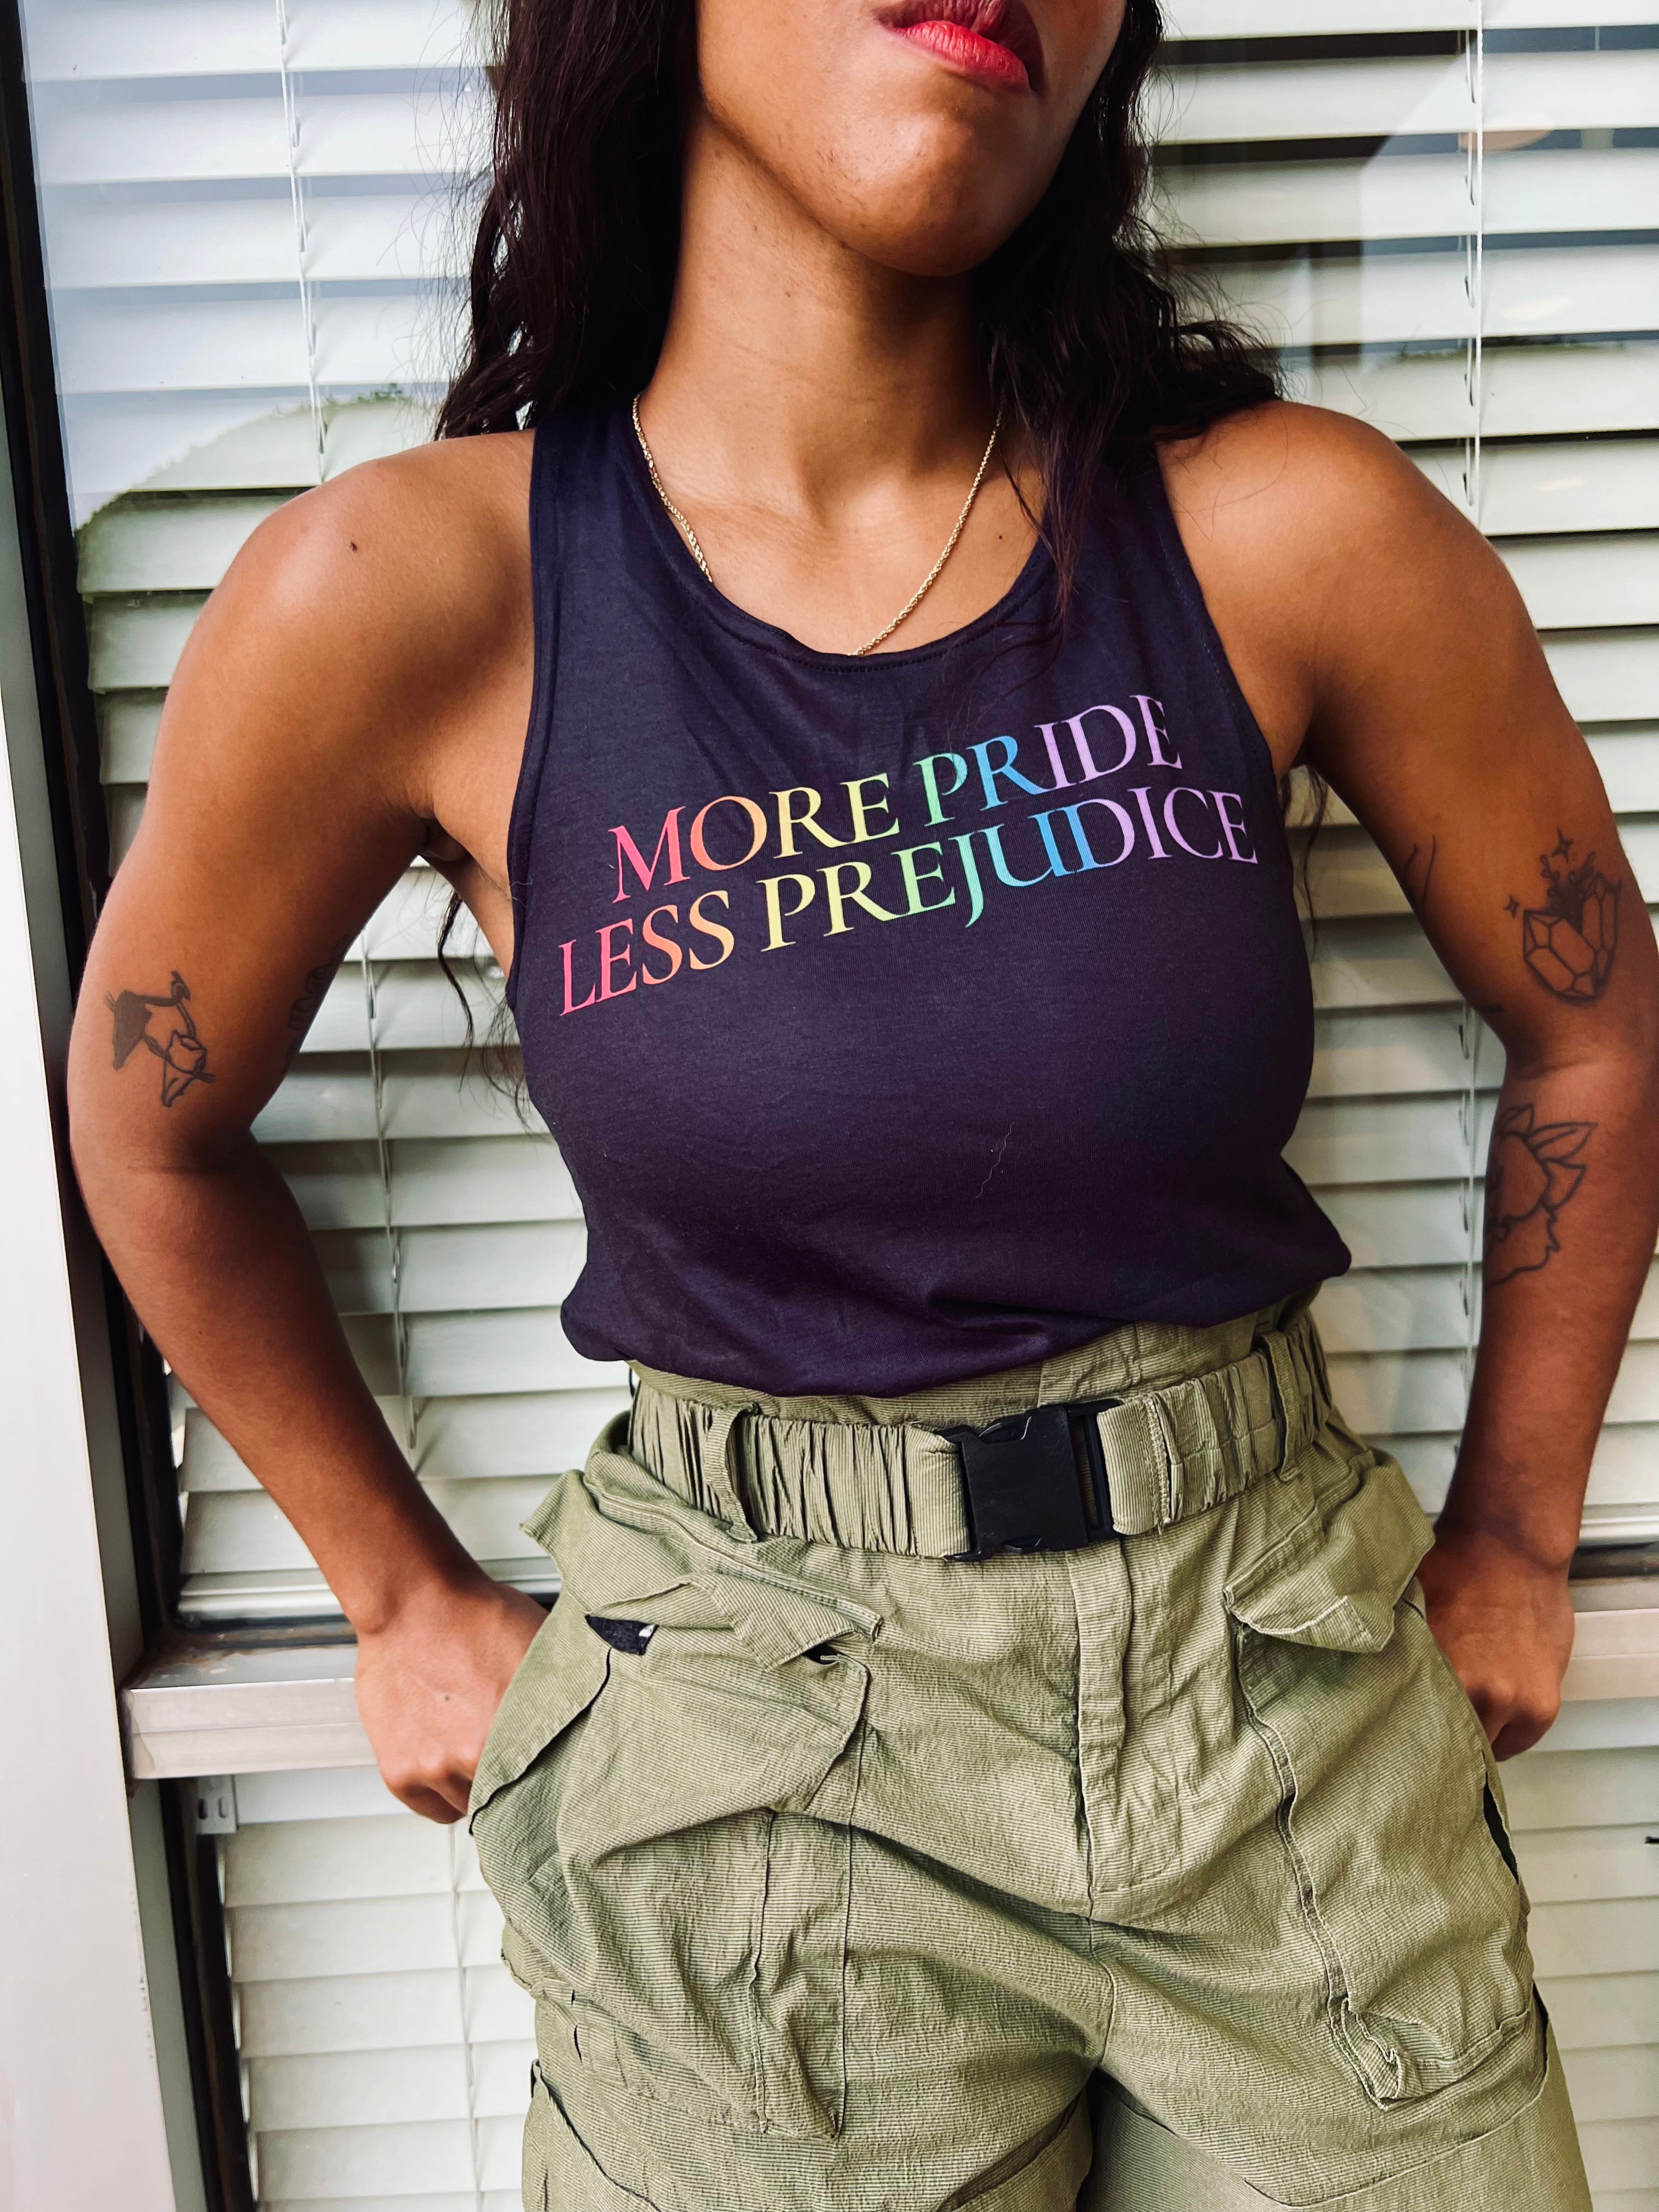 LGBT_Pride-More Pride less Prejudice Tank Top - Rose Gold Co. Shop